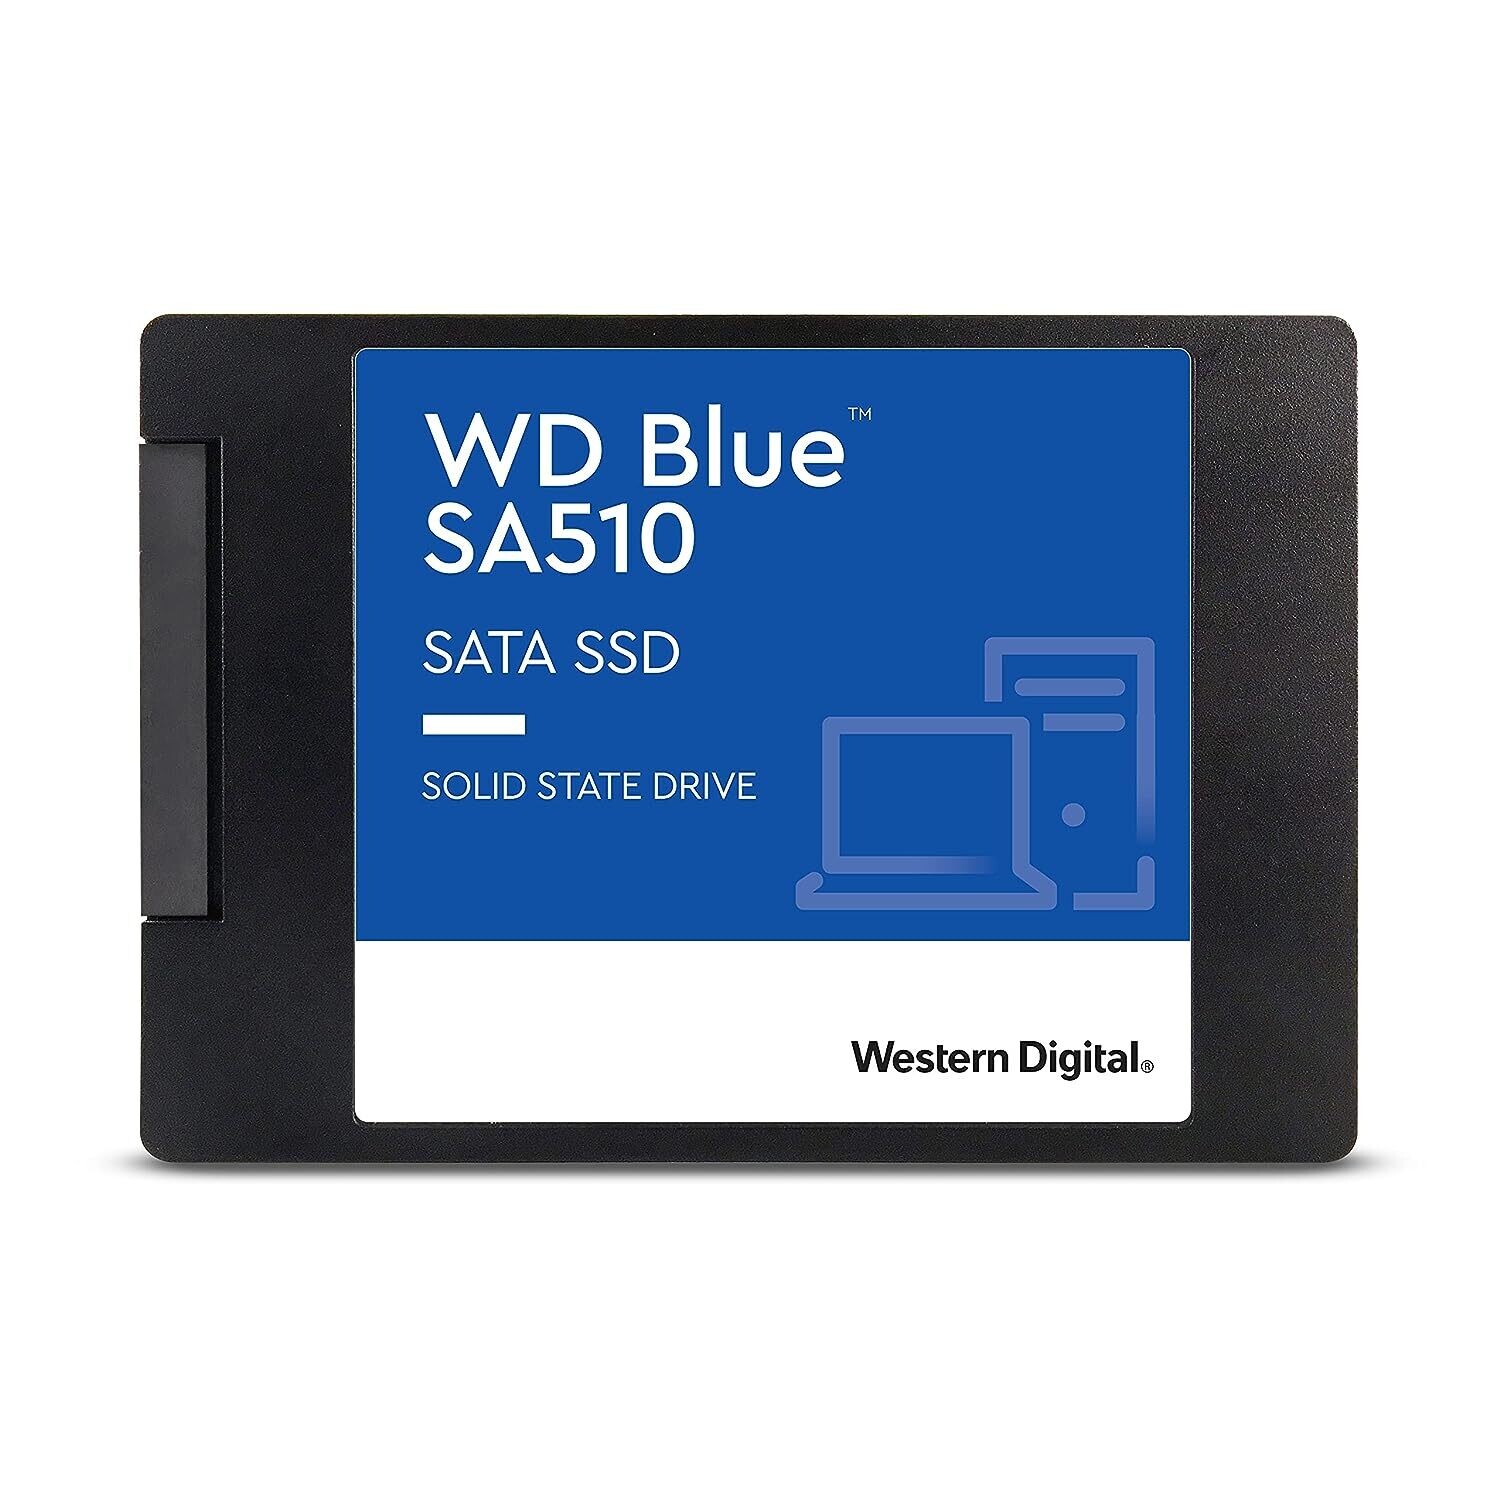 WD Blue SA510 SATA 500GB SSD